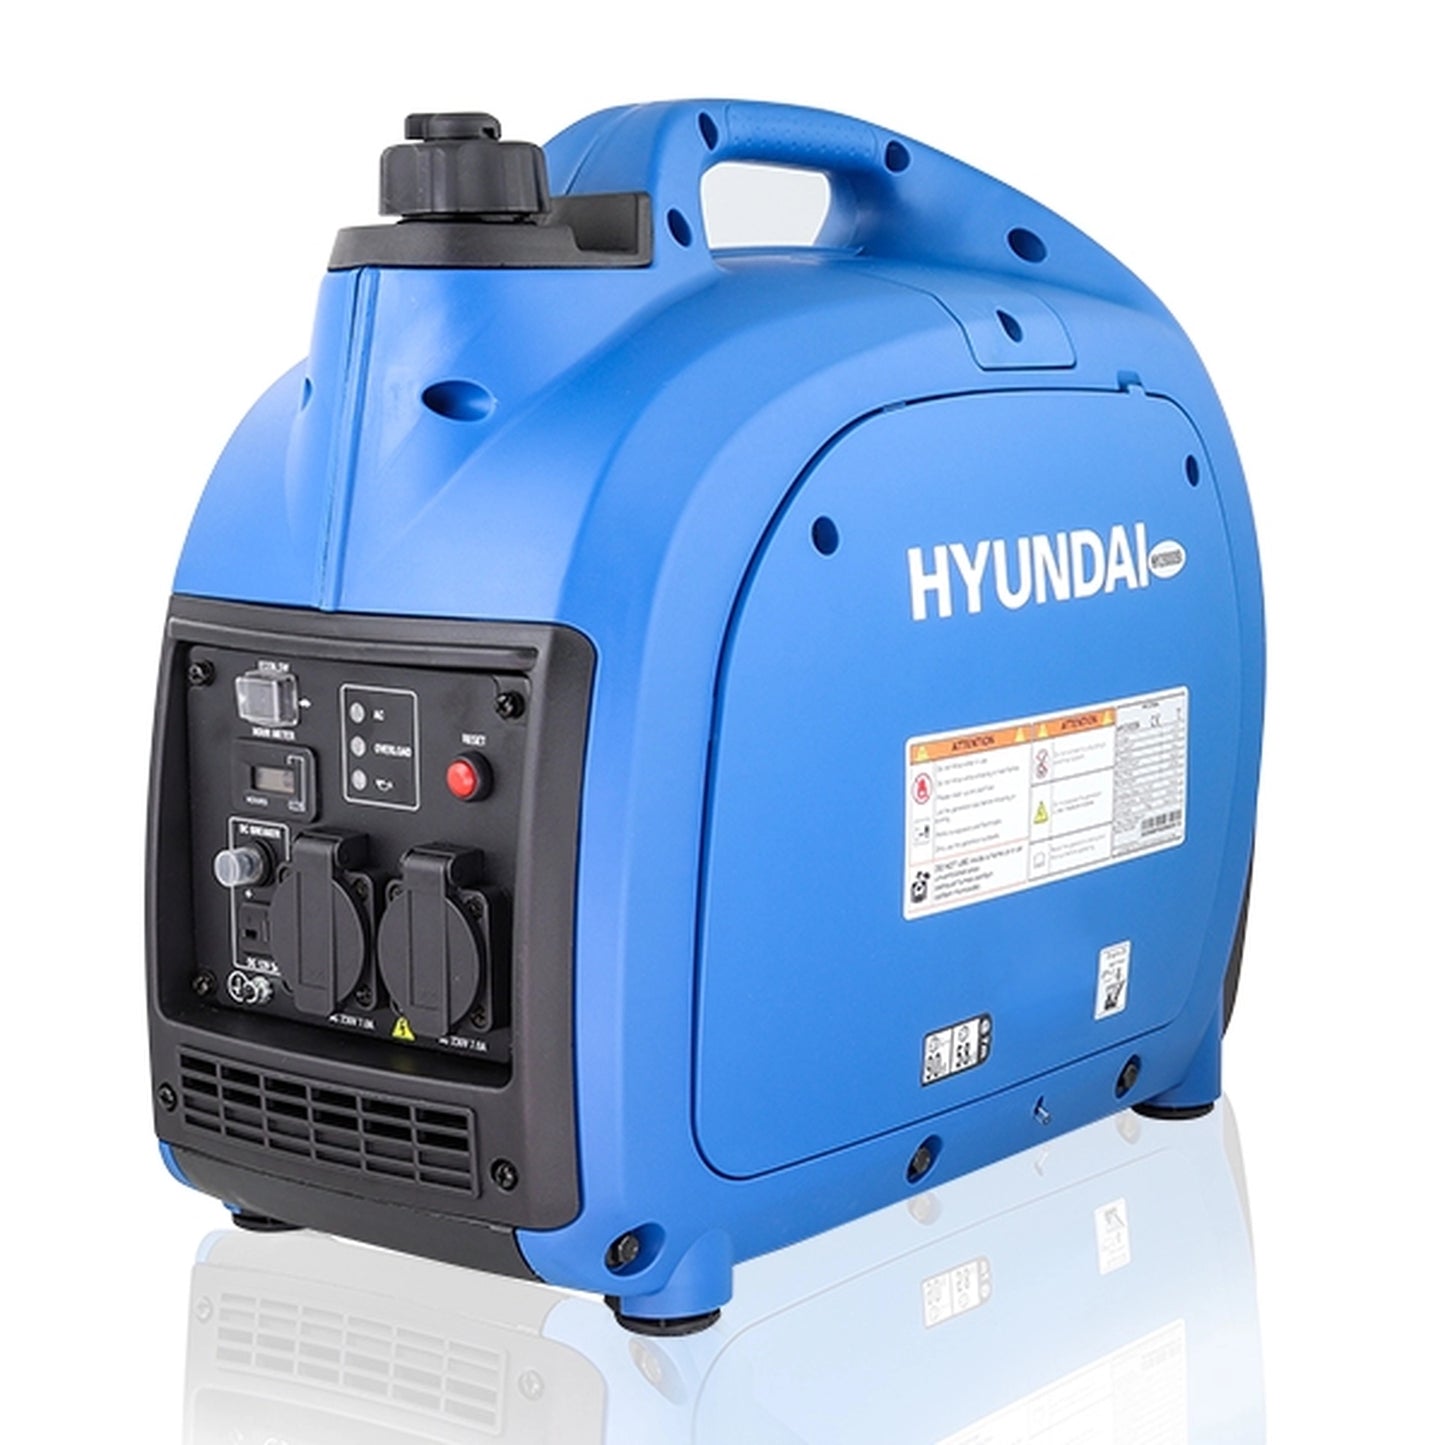 Hyundai HY2000Si 2kW Portable Petrol Inverter Generator